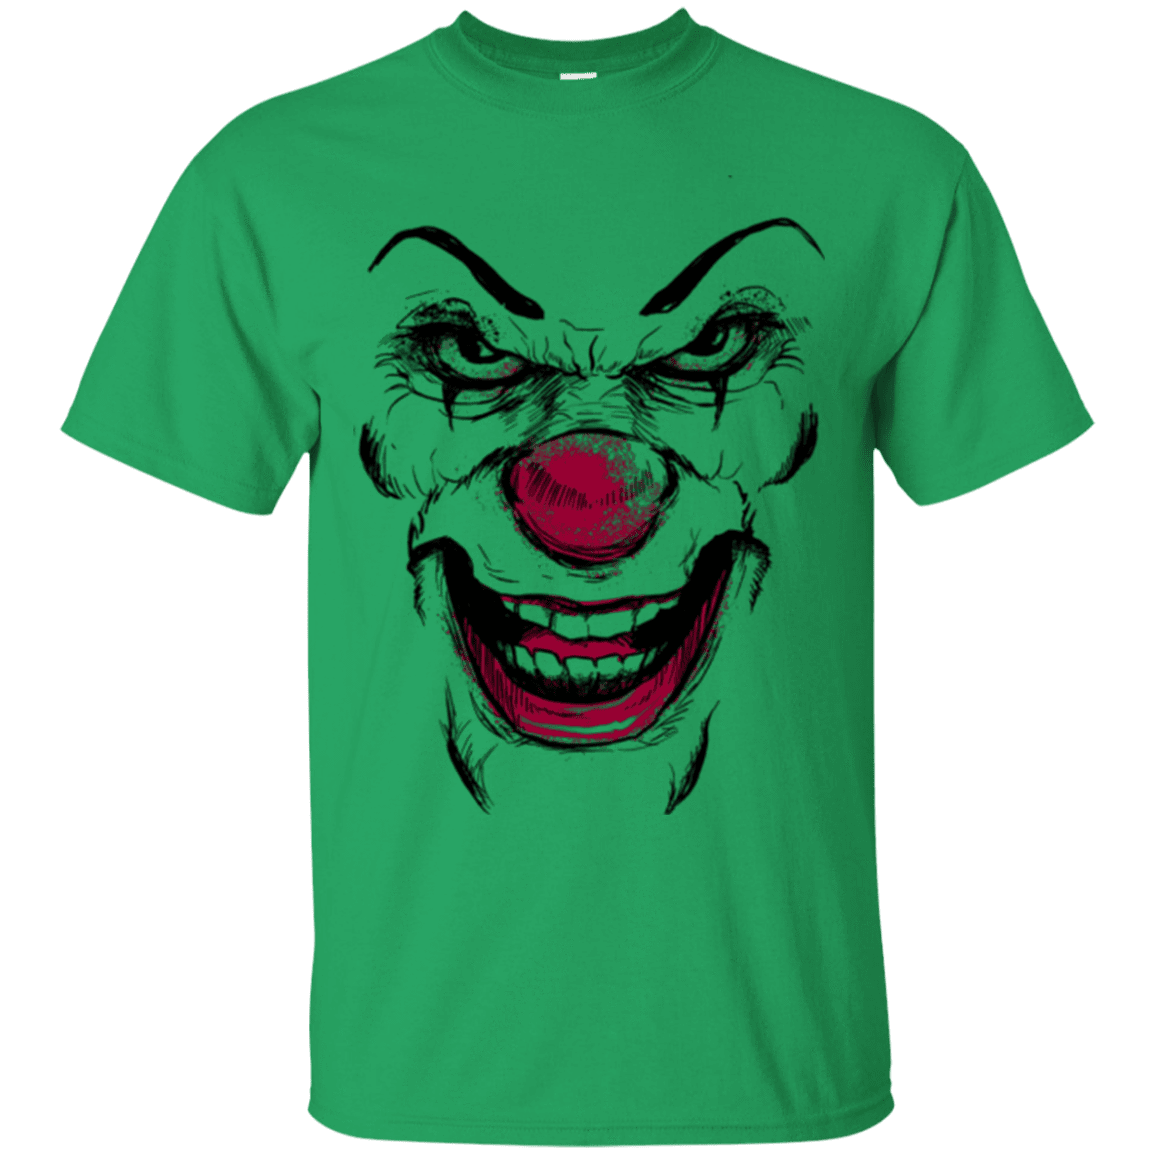 T-Shirts Irish Green / Small Clown Face T-Shirt